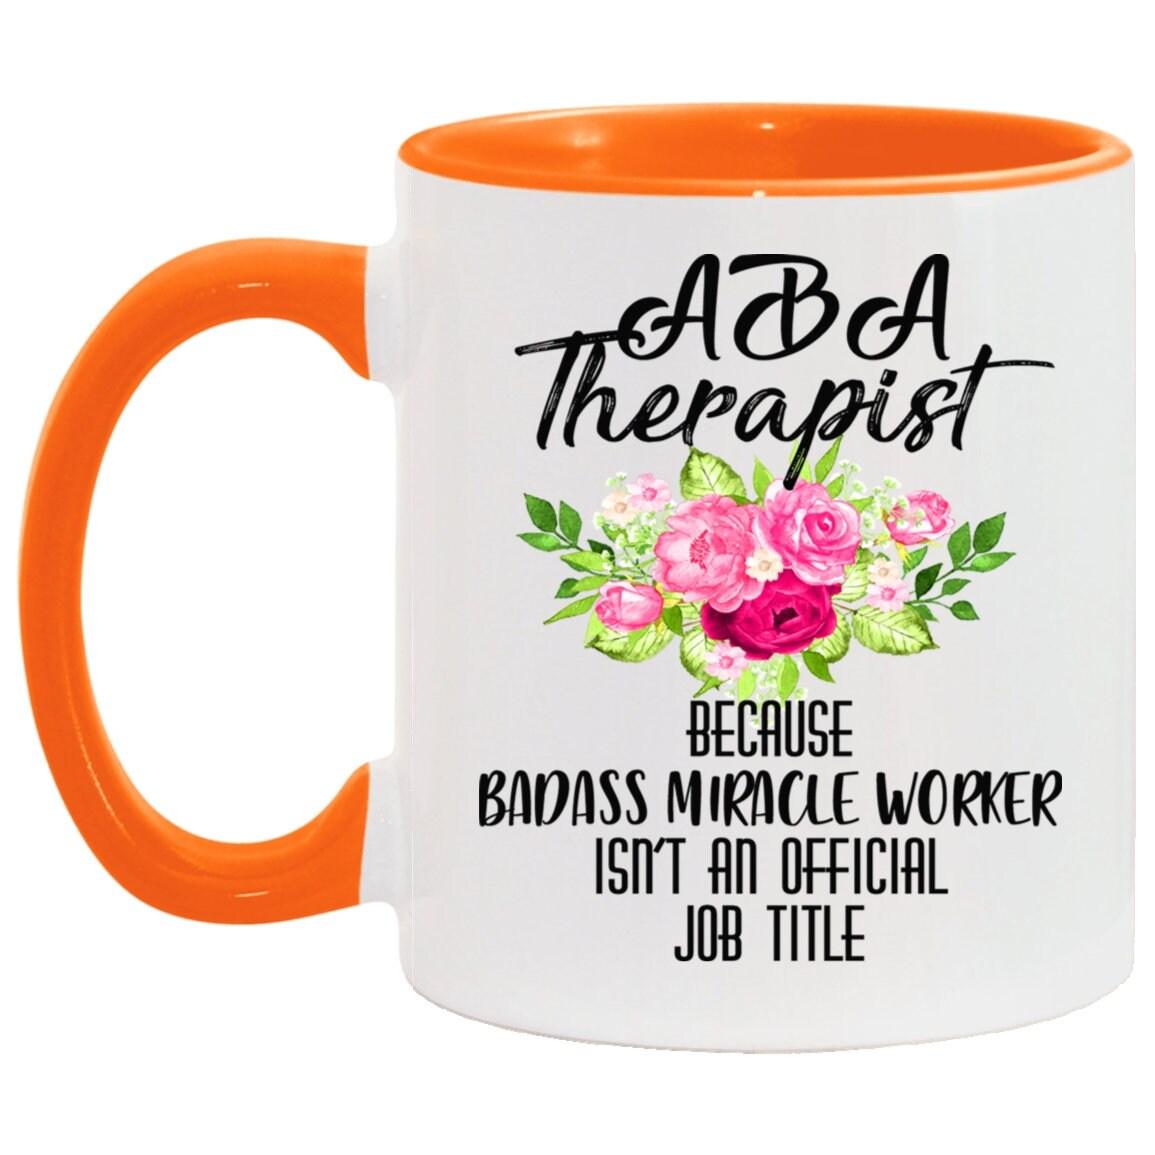 aba terapeut Accent Krus || bcba gaver || Adfærdsterapeutkrus - Fordi Badass Miracle Worker ikke er en officiel jobtitel - plusminusco.com